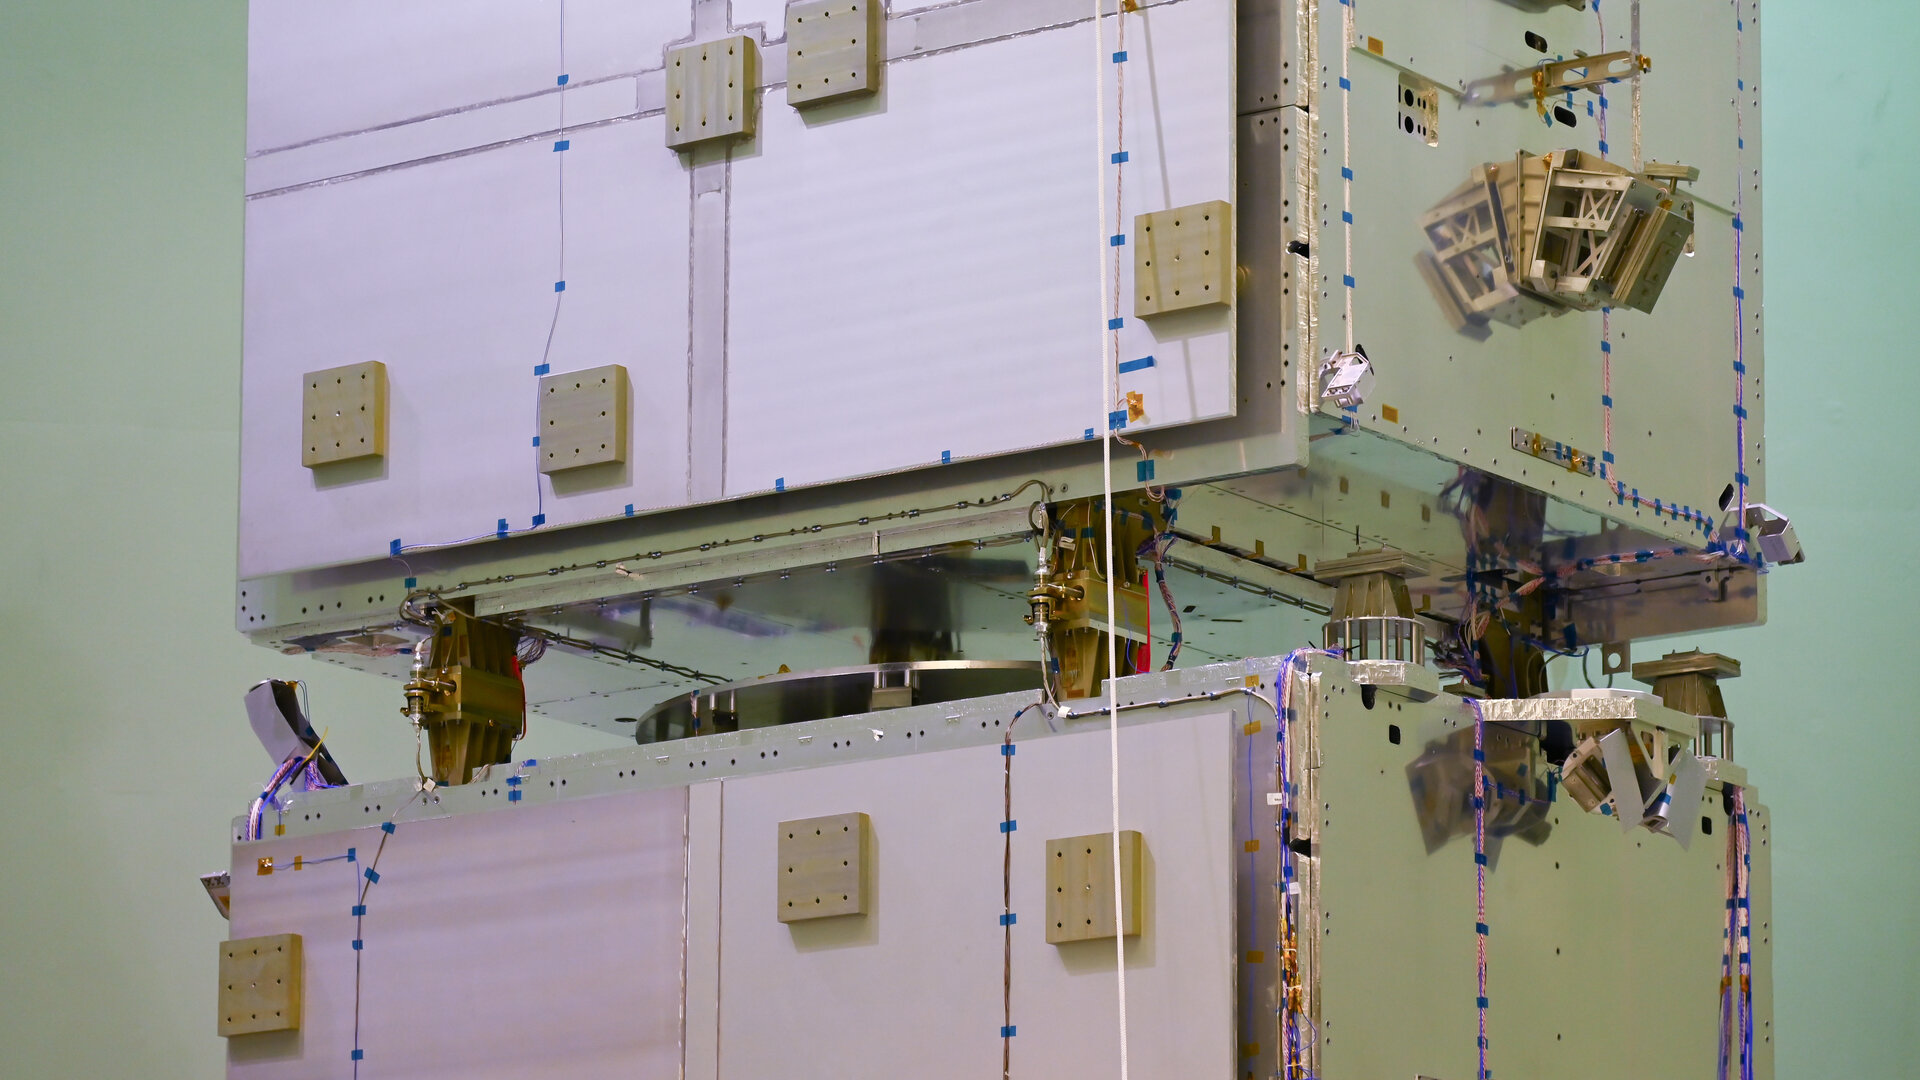 ESA - Galileo Second Generation satellite aces first hardware tests